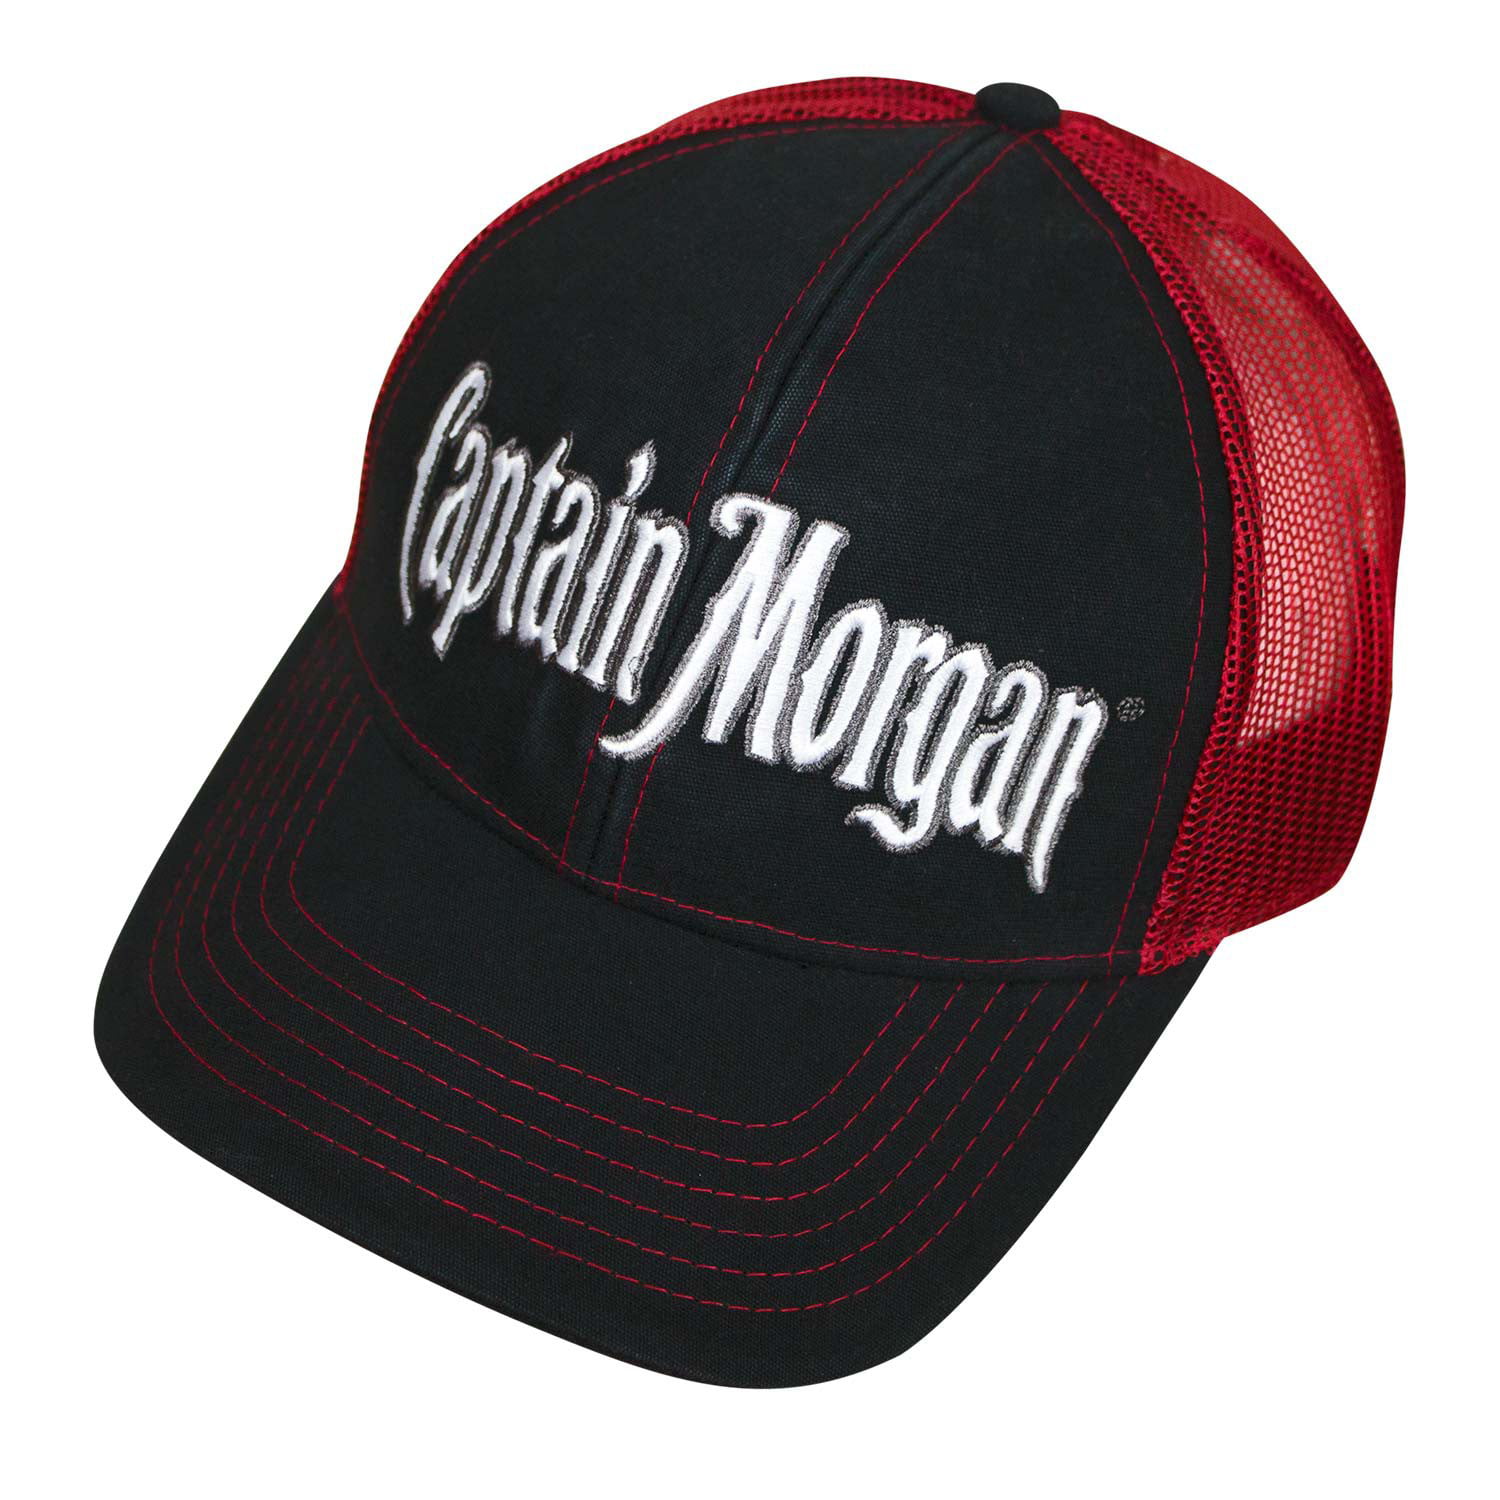 Captain Morgan Trucker Hat Mesh Cap Snapback Adjustable Brand New-Black 